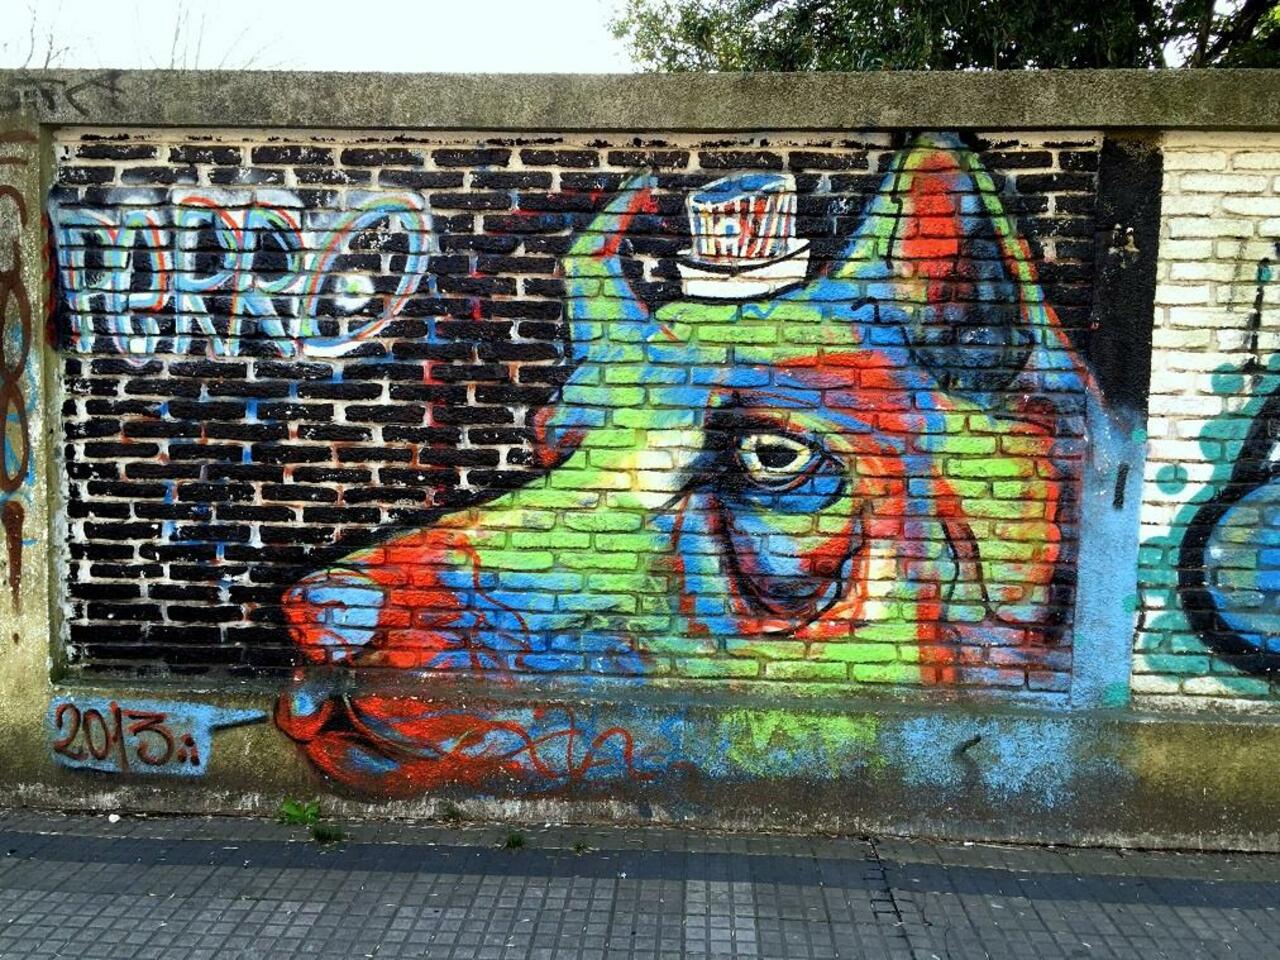 RT @DickieRandrup: #Graffiti de hoy: << El perro >> calle 9, 66y67 #LaPlata #Argentina #StreetArt #UrbanArt #ArteUrbano http://t.co/3tEWPIKdAK